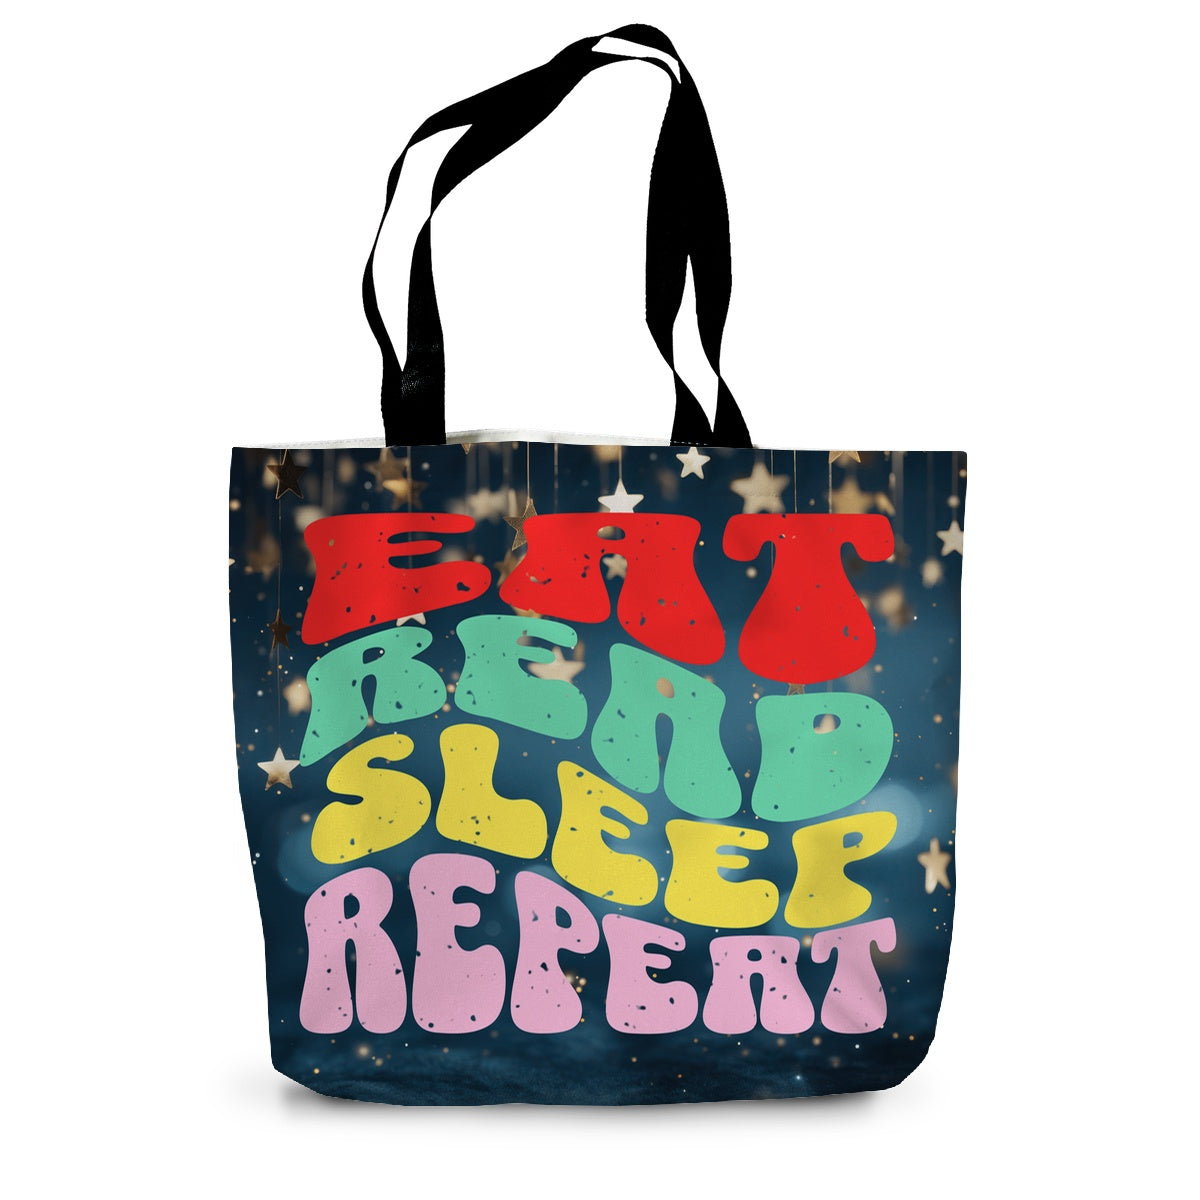 Eat Read Sleep Repeat Canvas Tote Bag